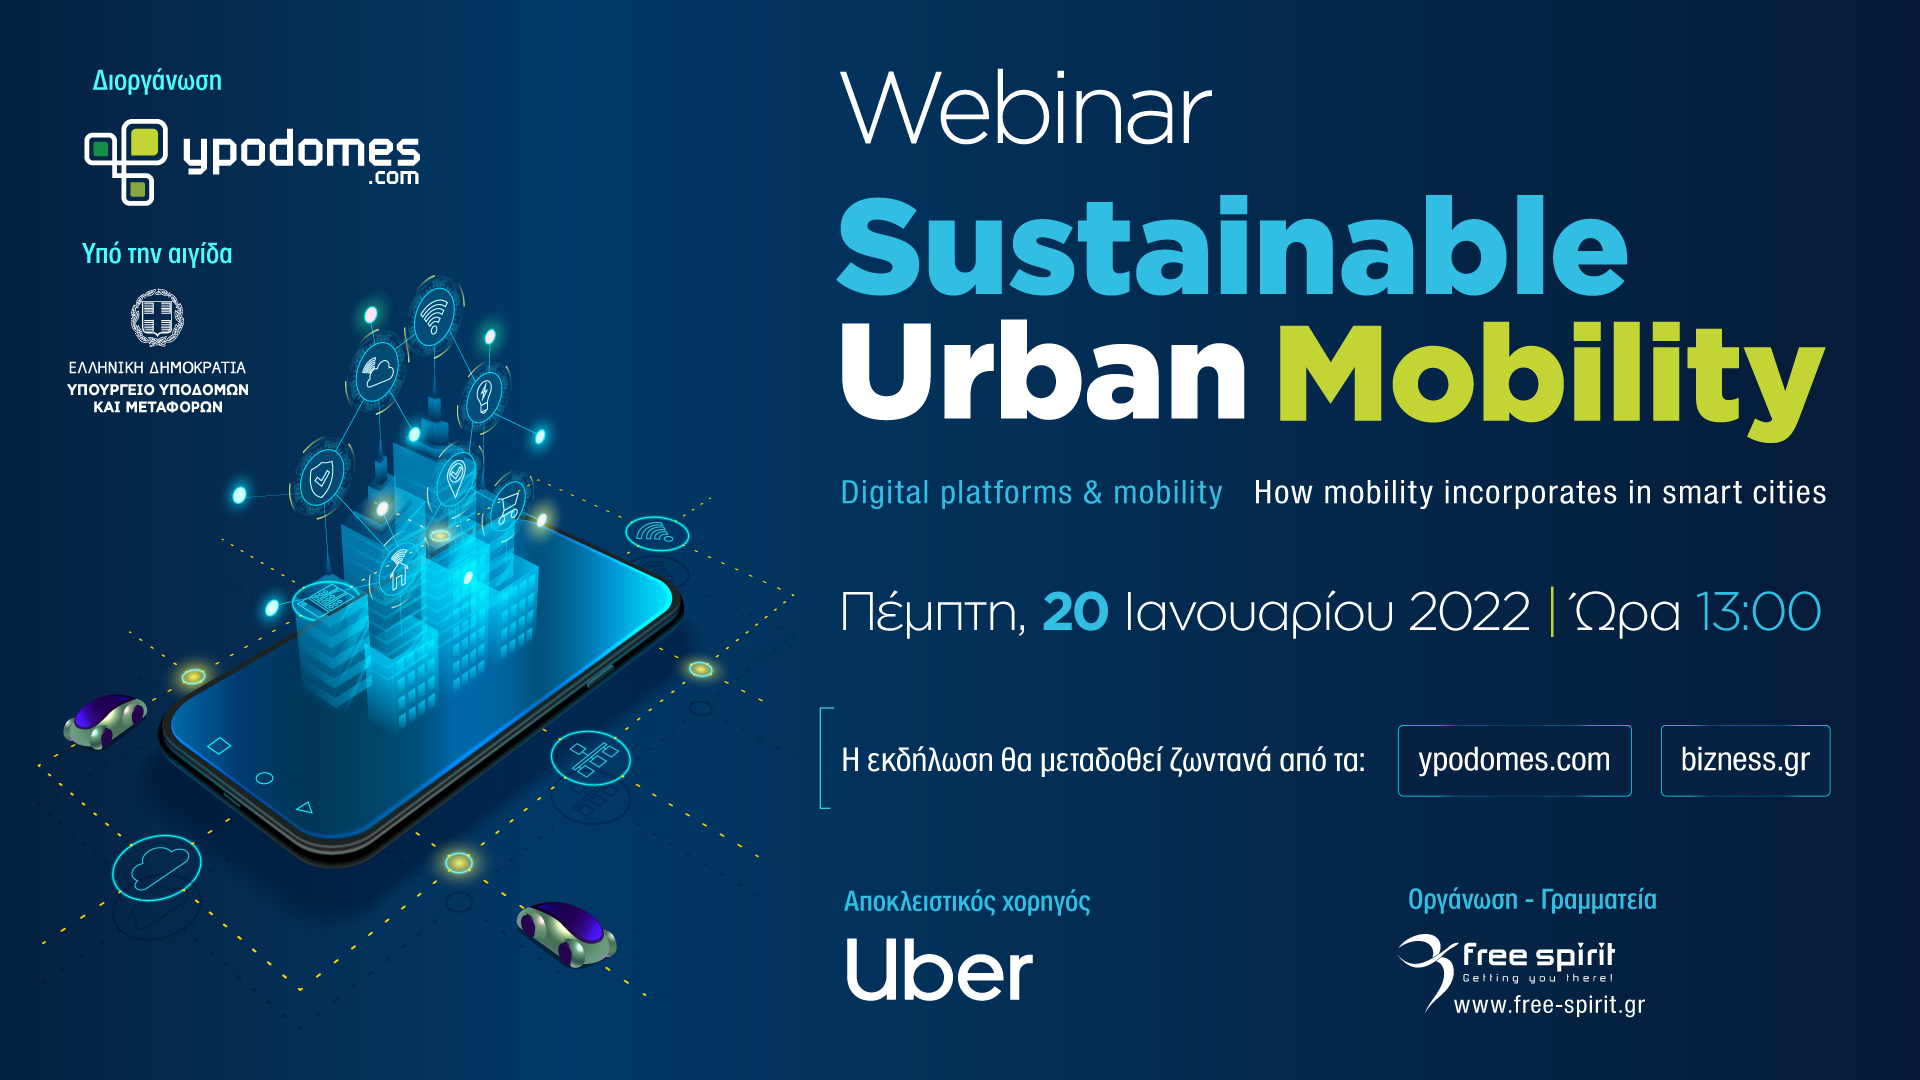 Webinar "Sustainable Urban Mobility"